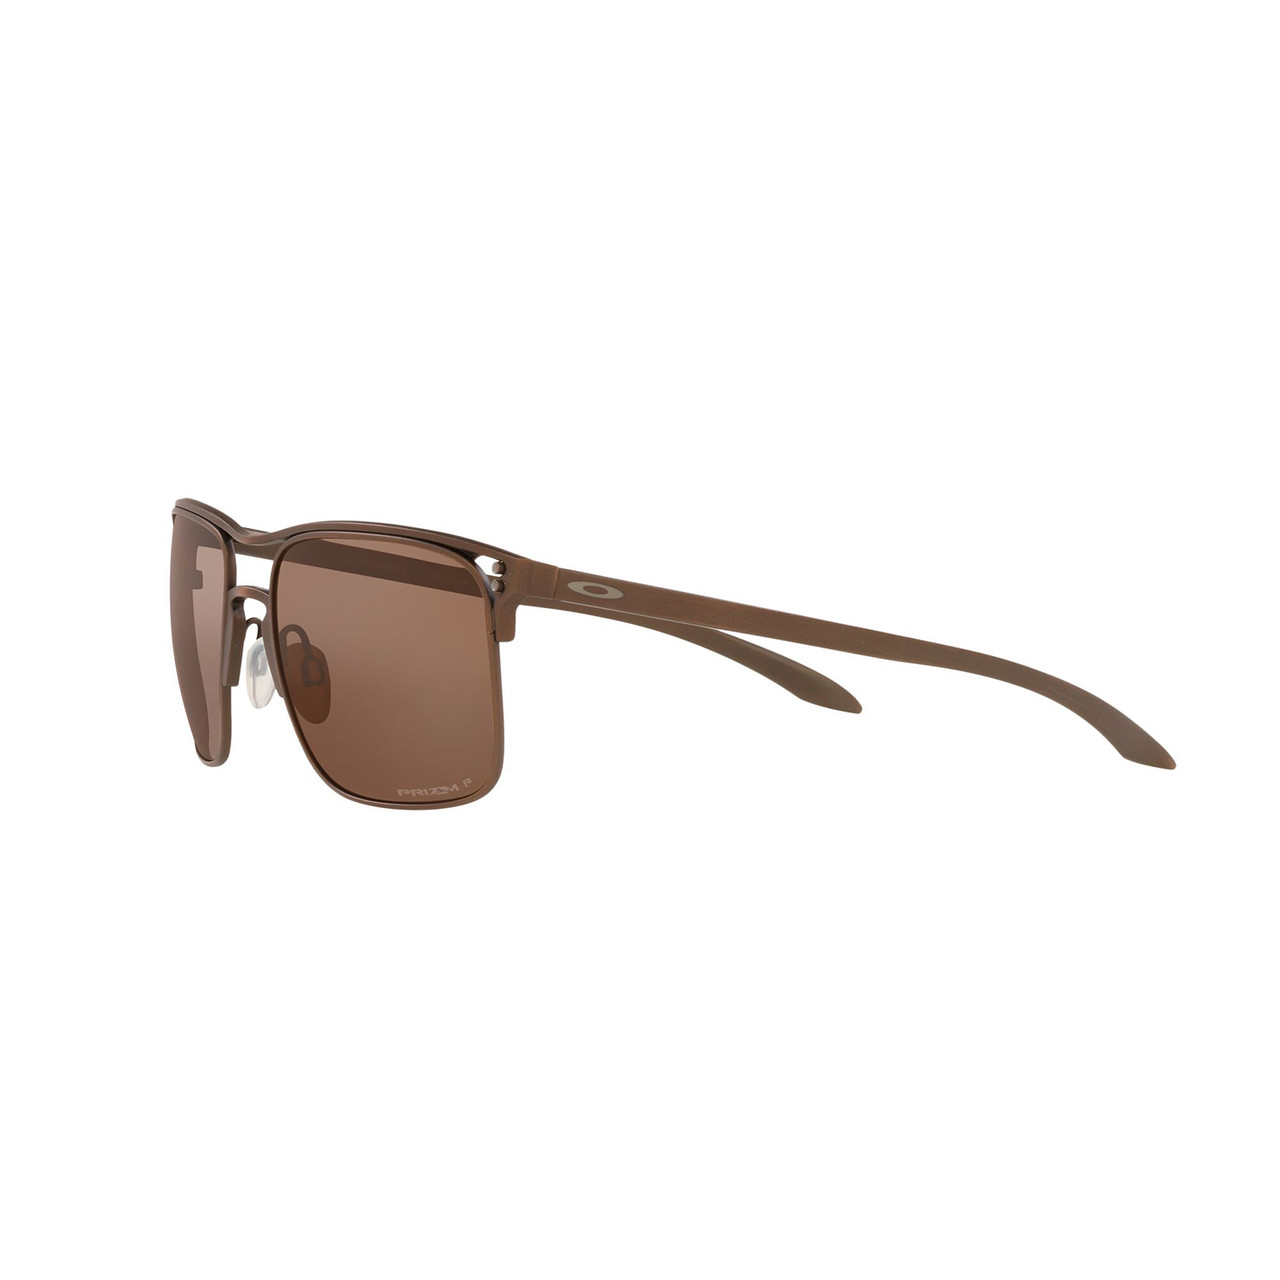 Holbrook™ Prizm Tungsten Polarized Lenses, Matte Black Frame Sunglasses